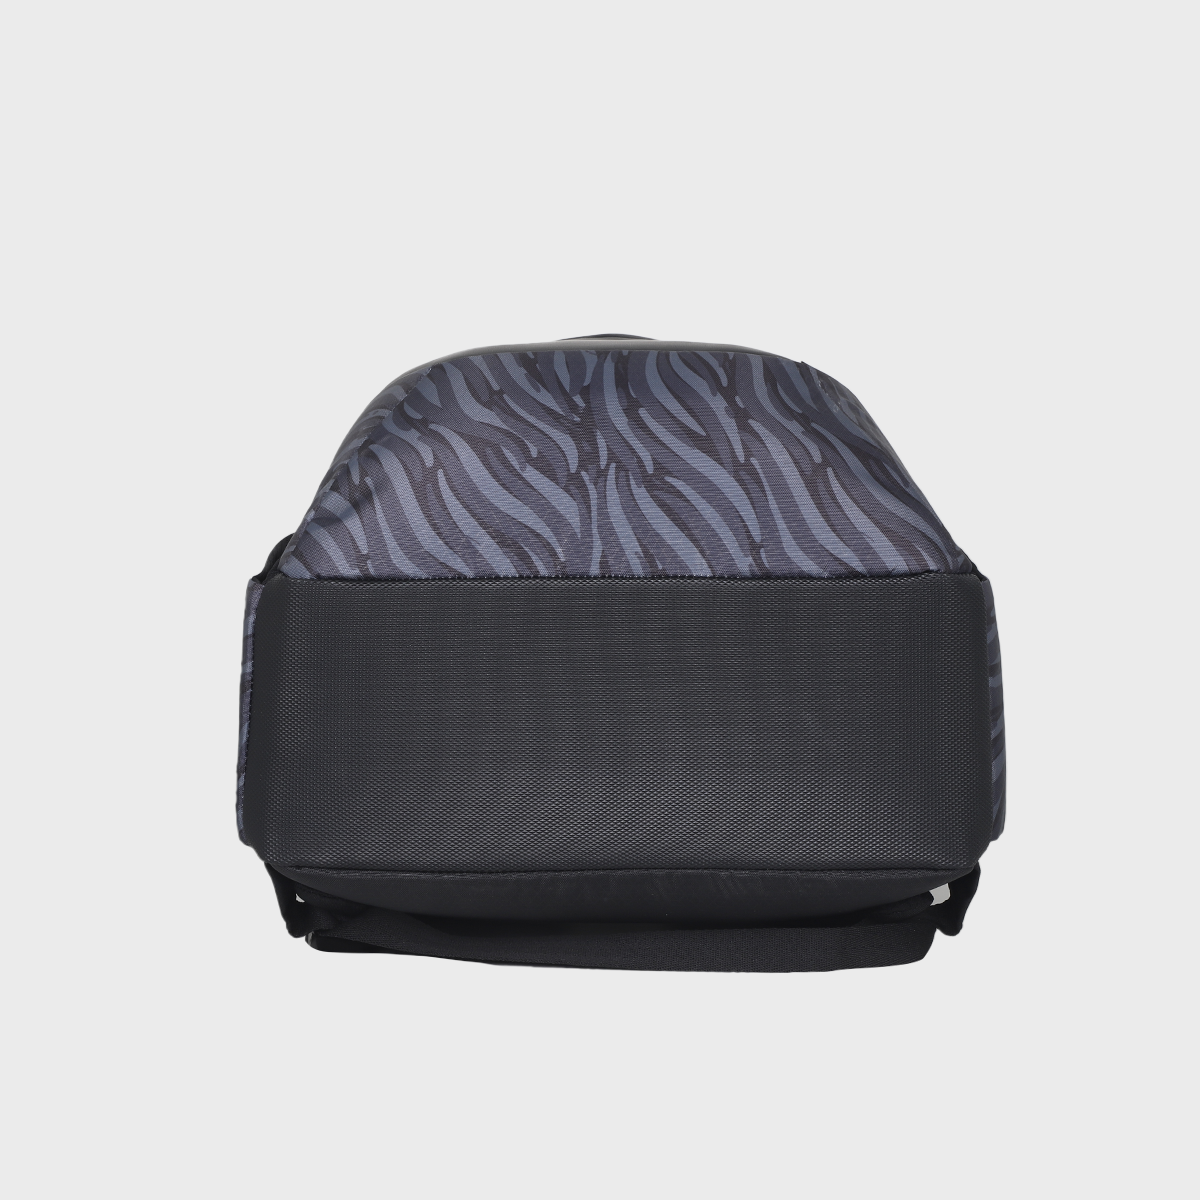 Arctic Fox 15.6" Laptop Backpack and College or Uni bag Vamp Black